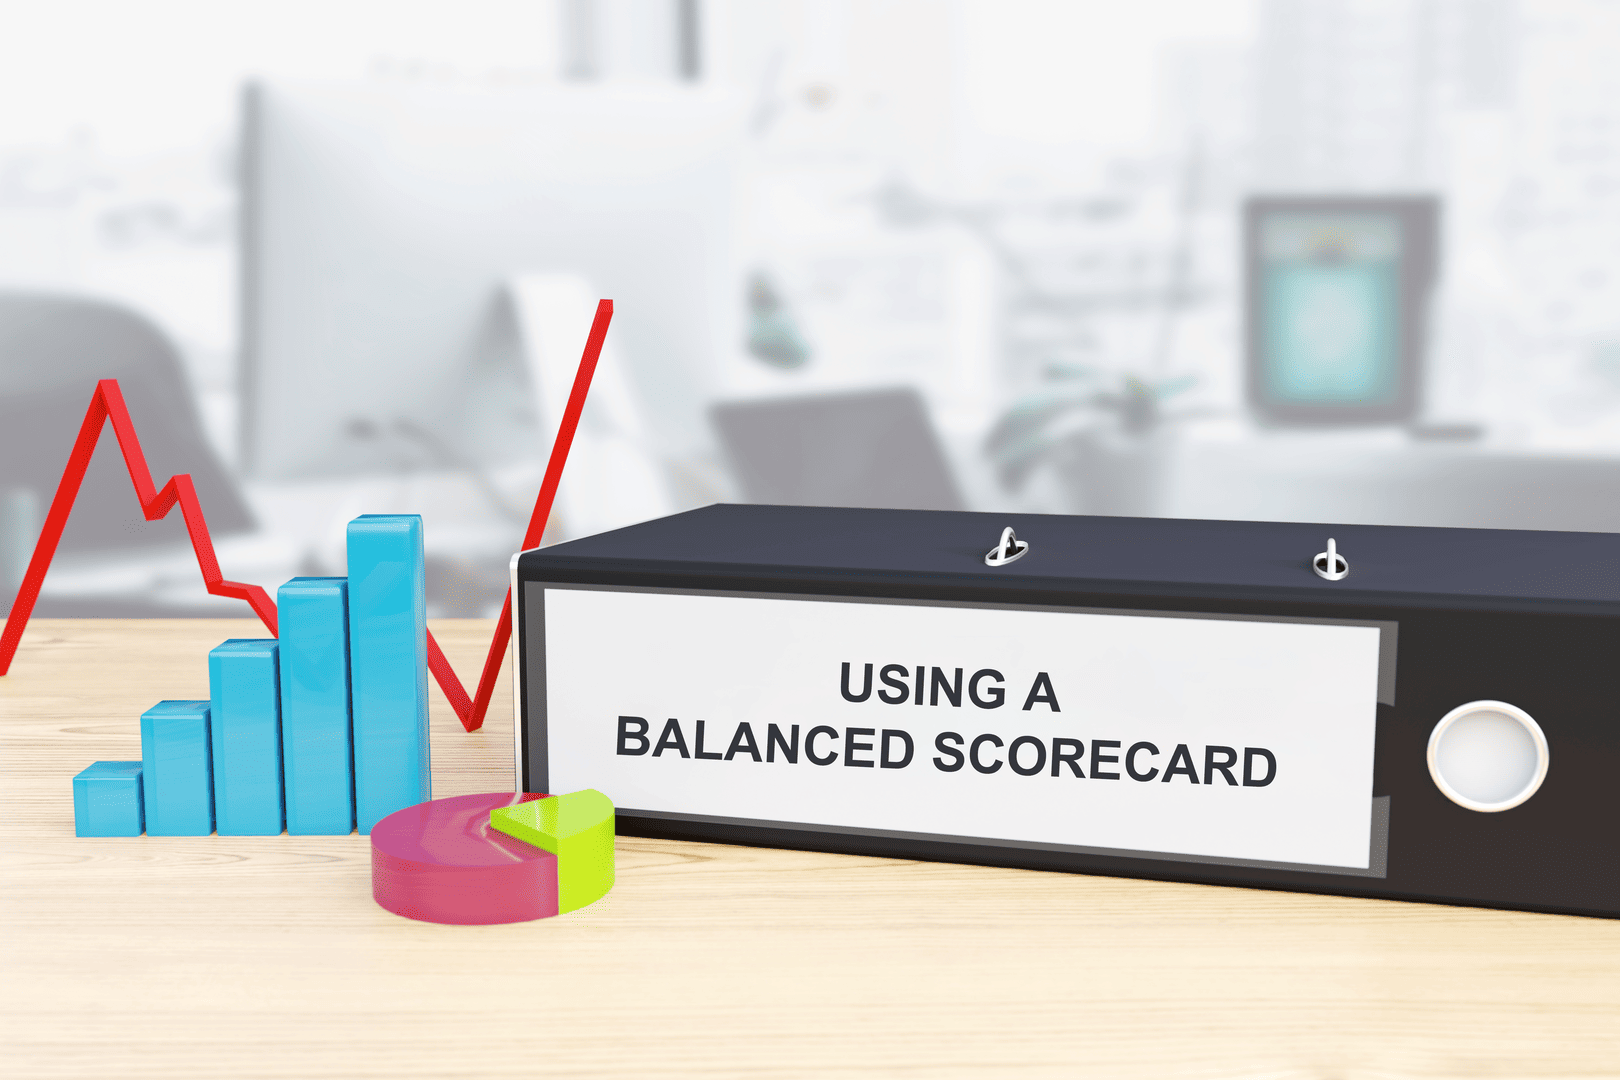 Blog Post: Using a Balanced Scorecard for Performance Management